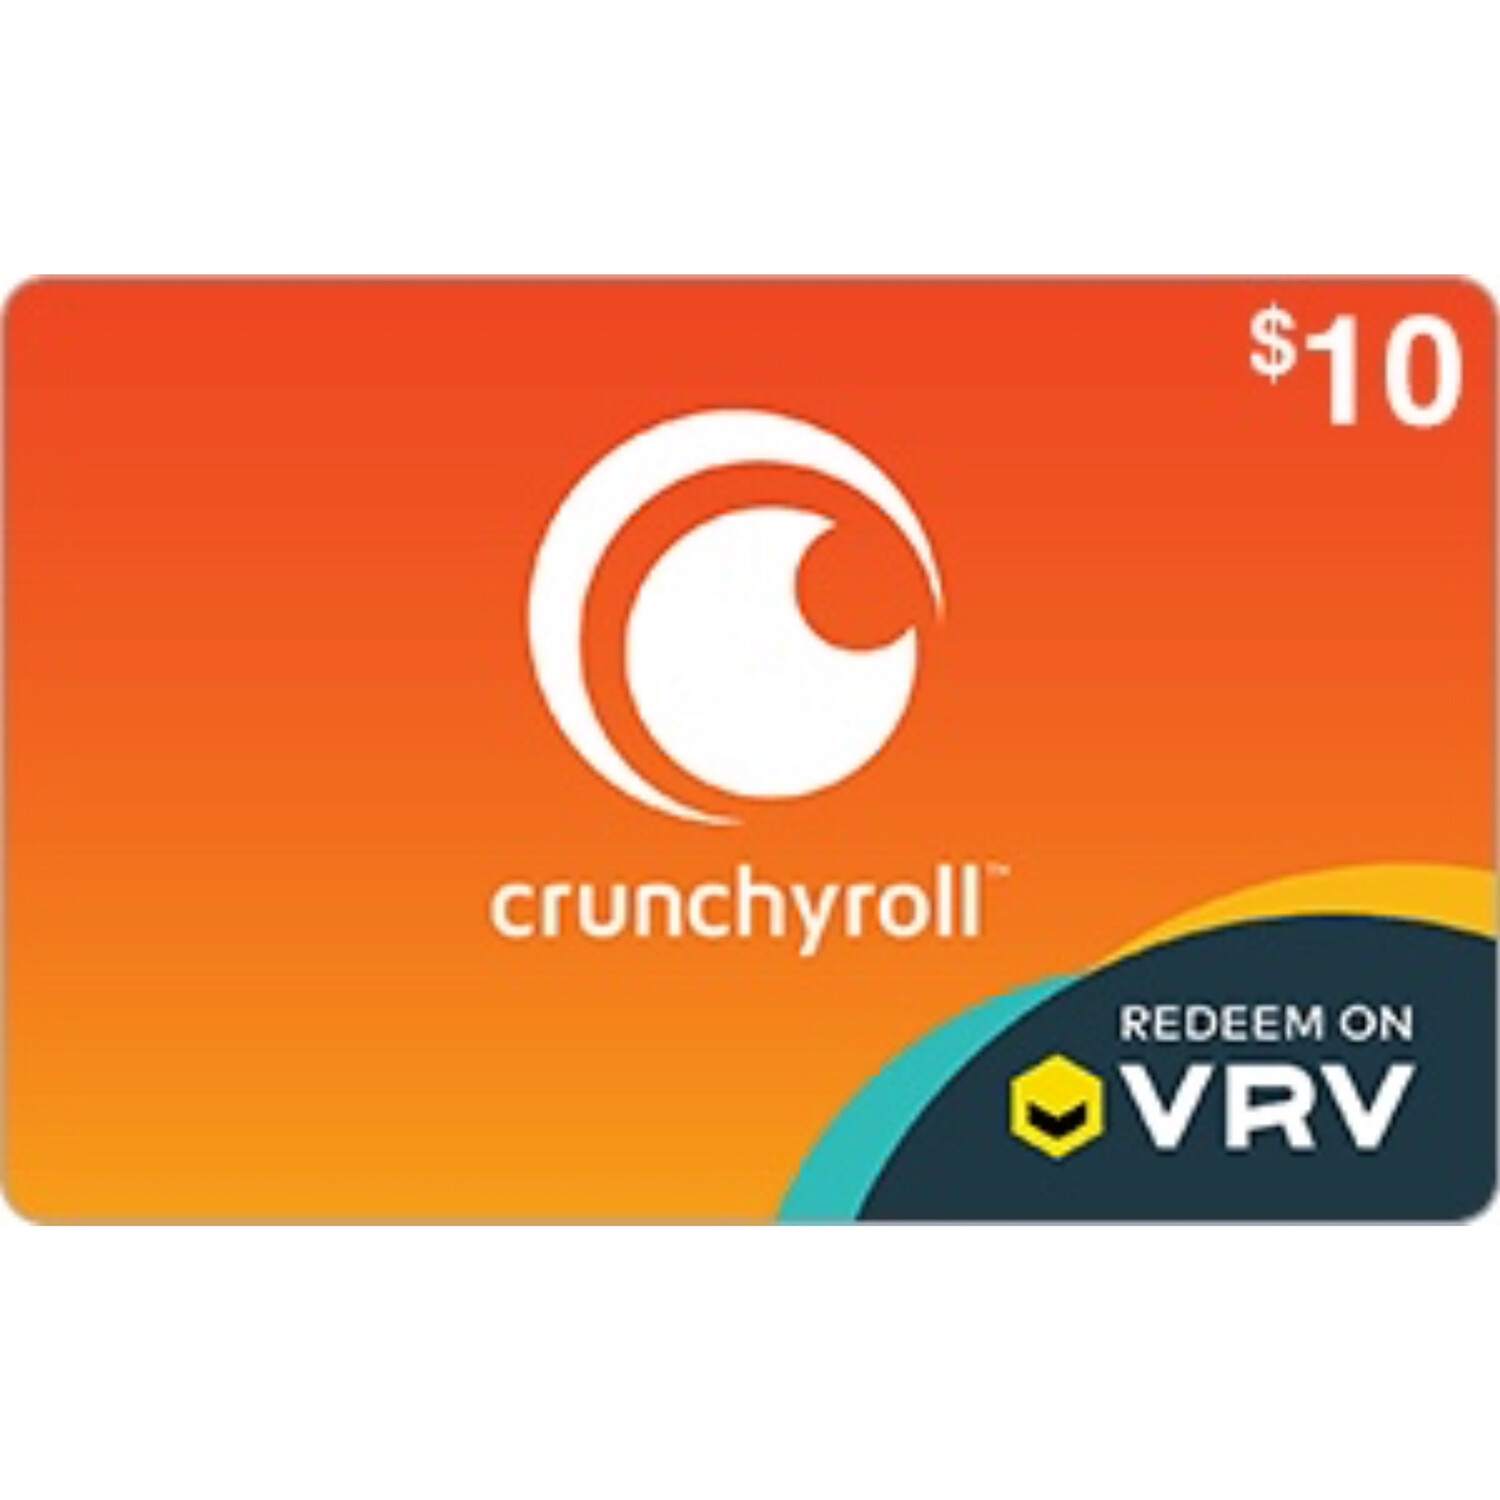 Crunchyroll Gift Card $10